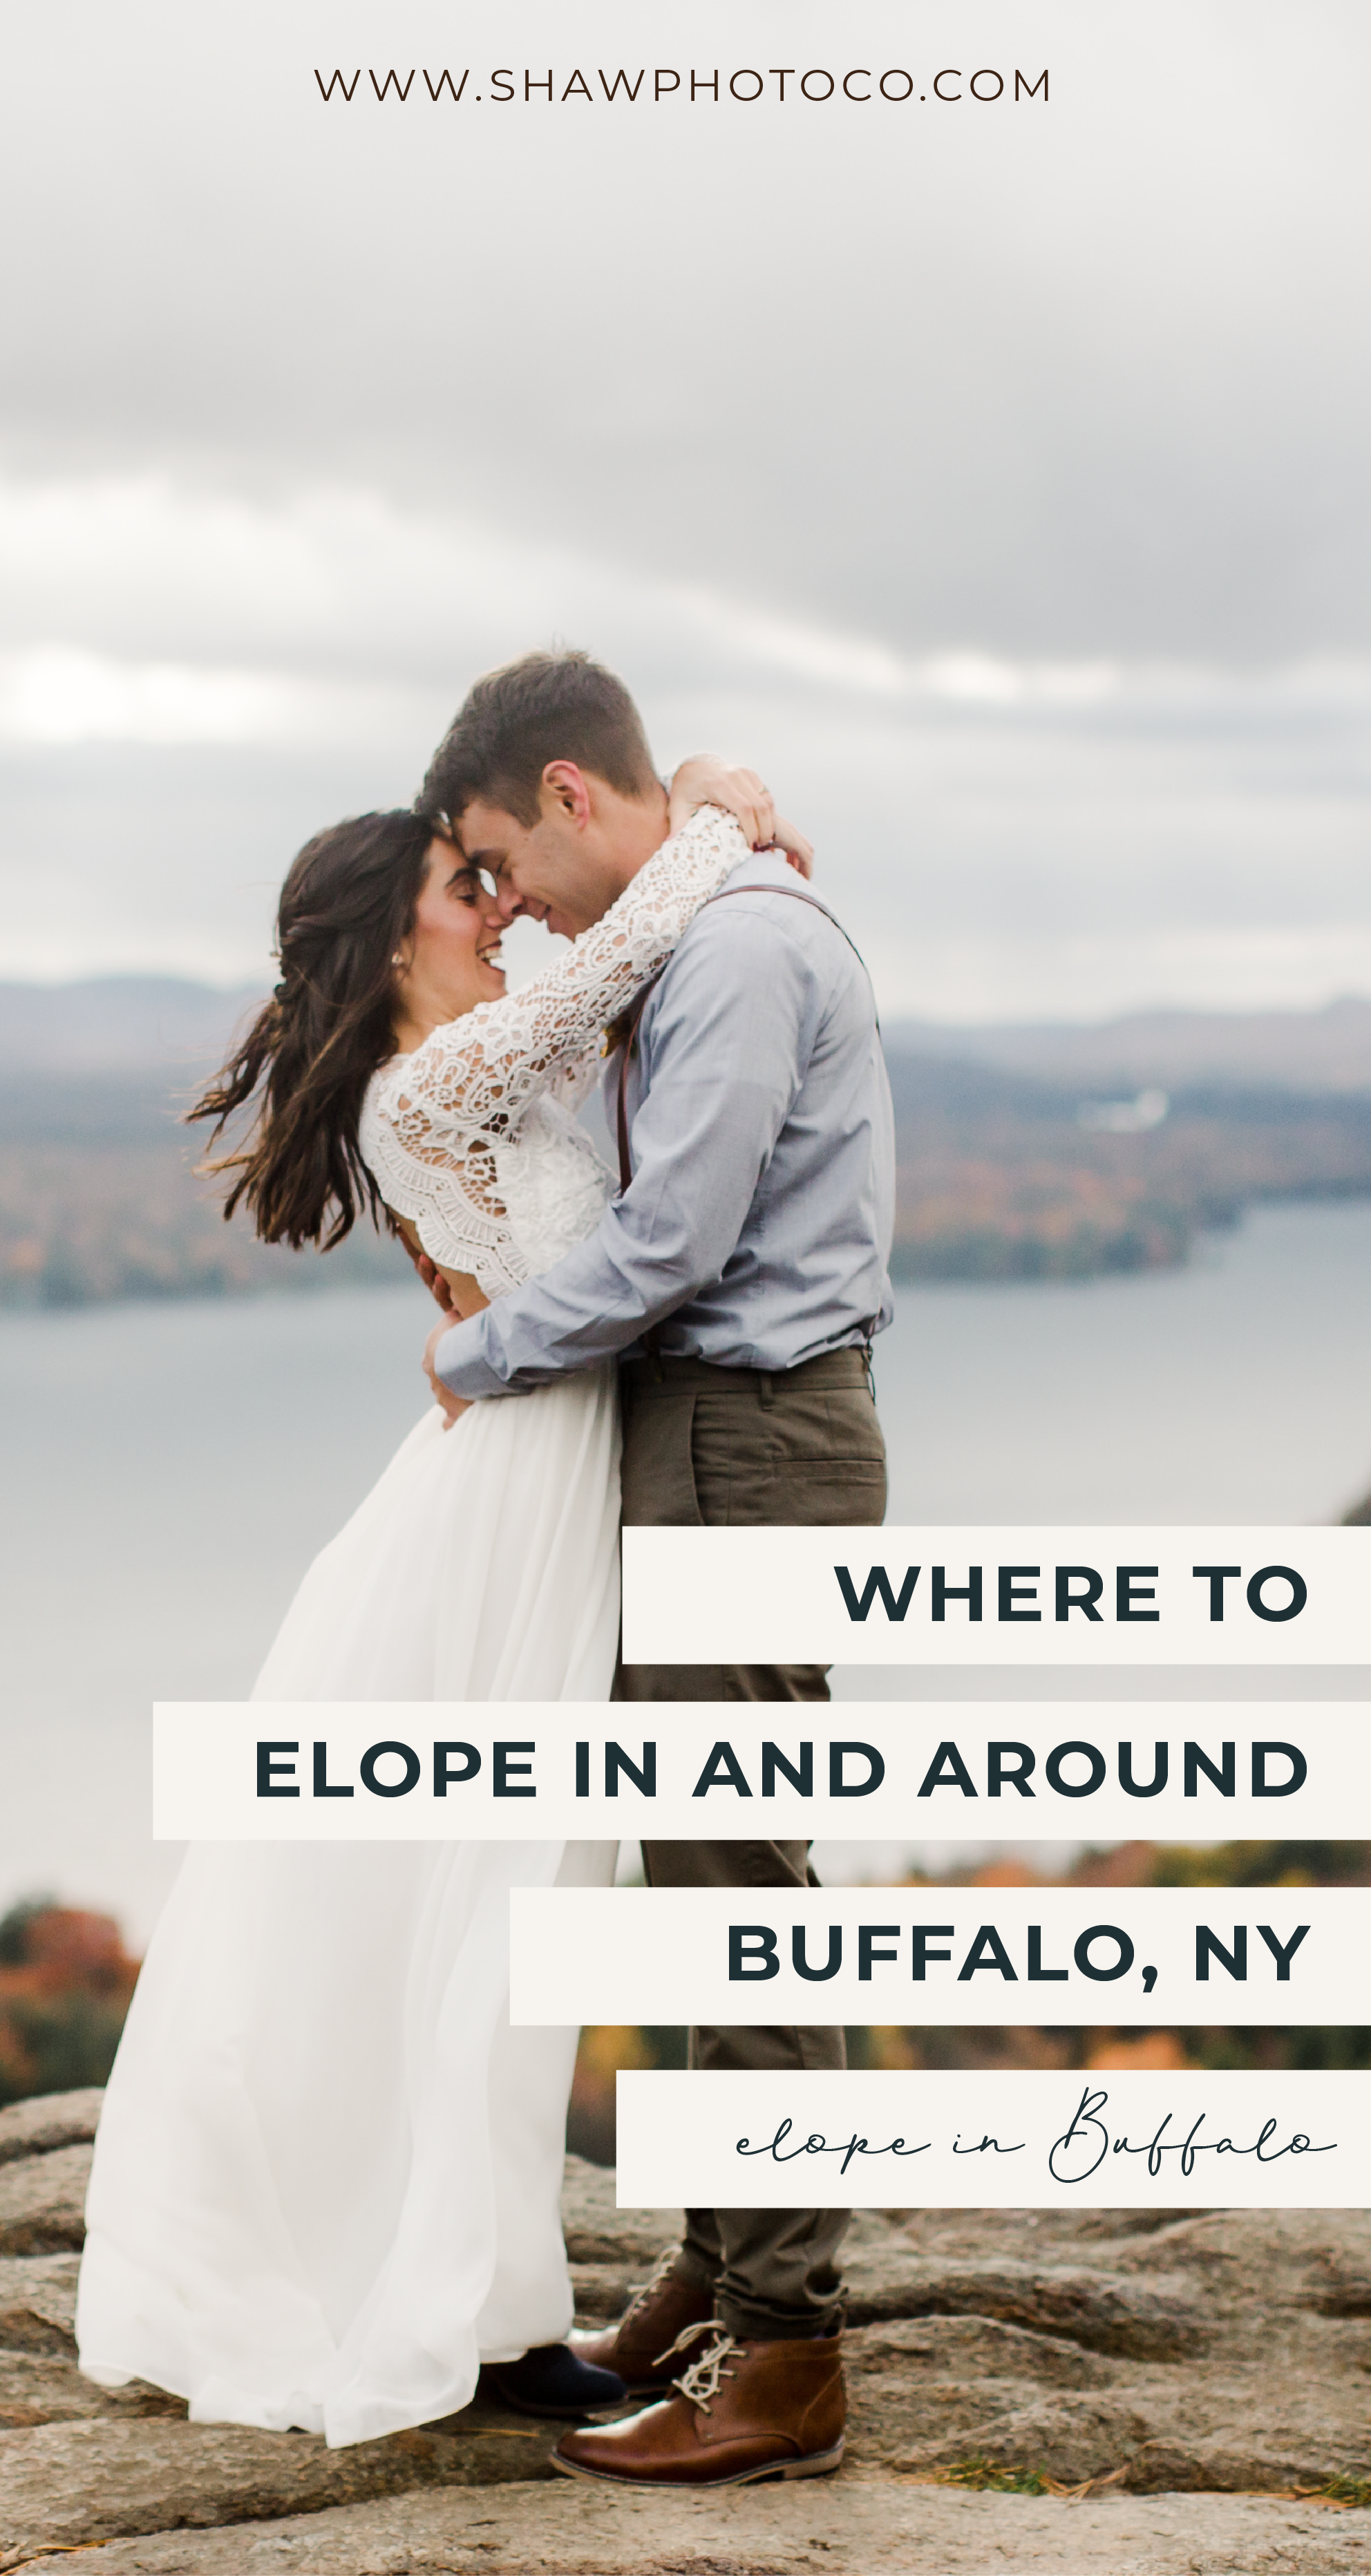 Where to Elope Near Buffalo New York - Shaw Photo Co. New York Elopement Photographers